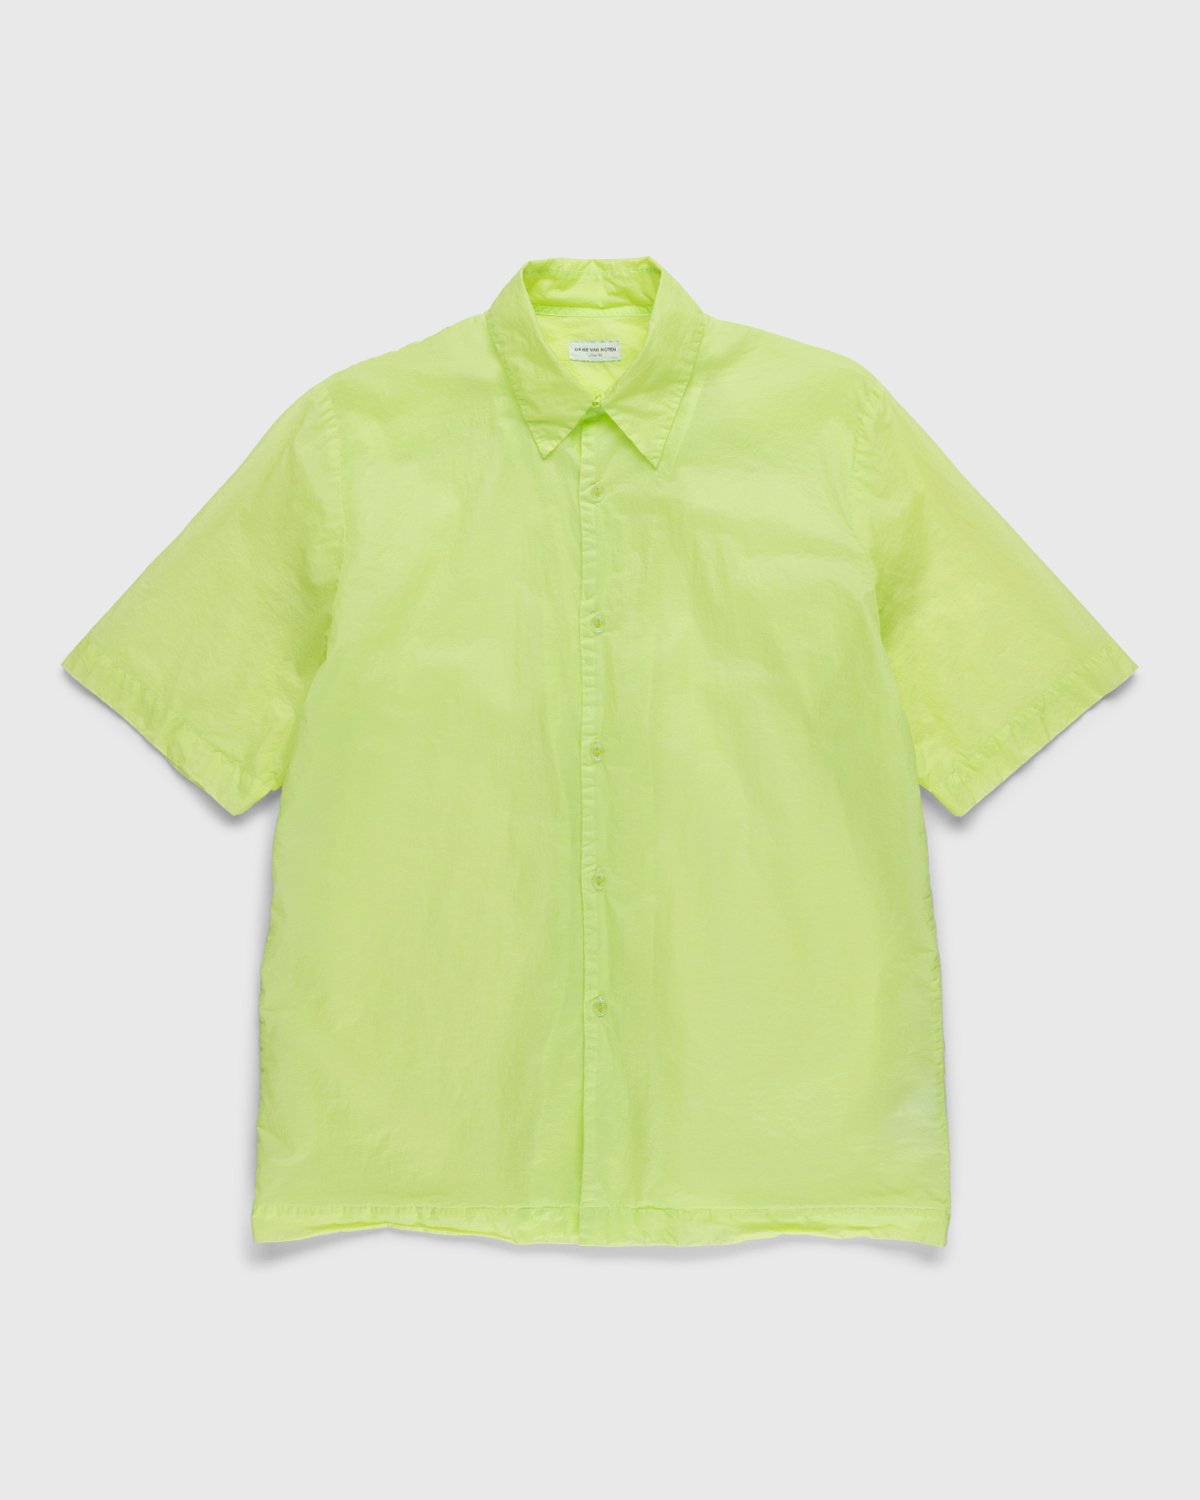 Dries van Noten - Clasen Shirt Lime - Clothing - Green - Image 1